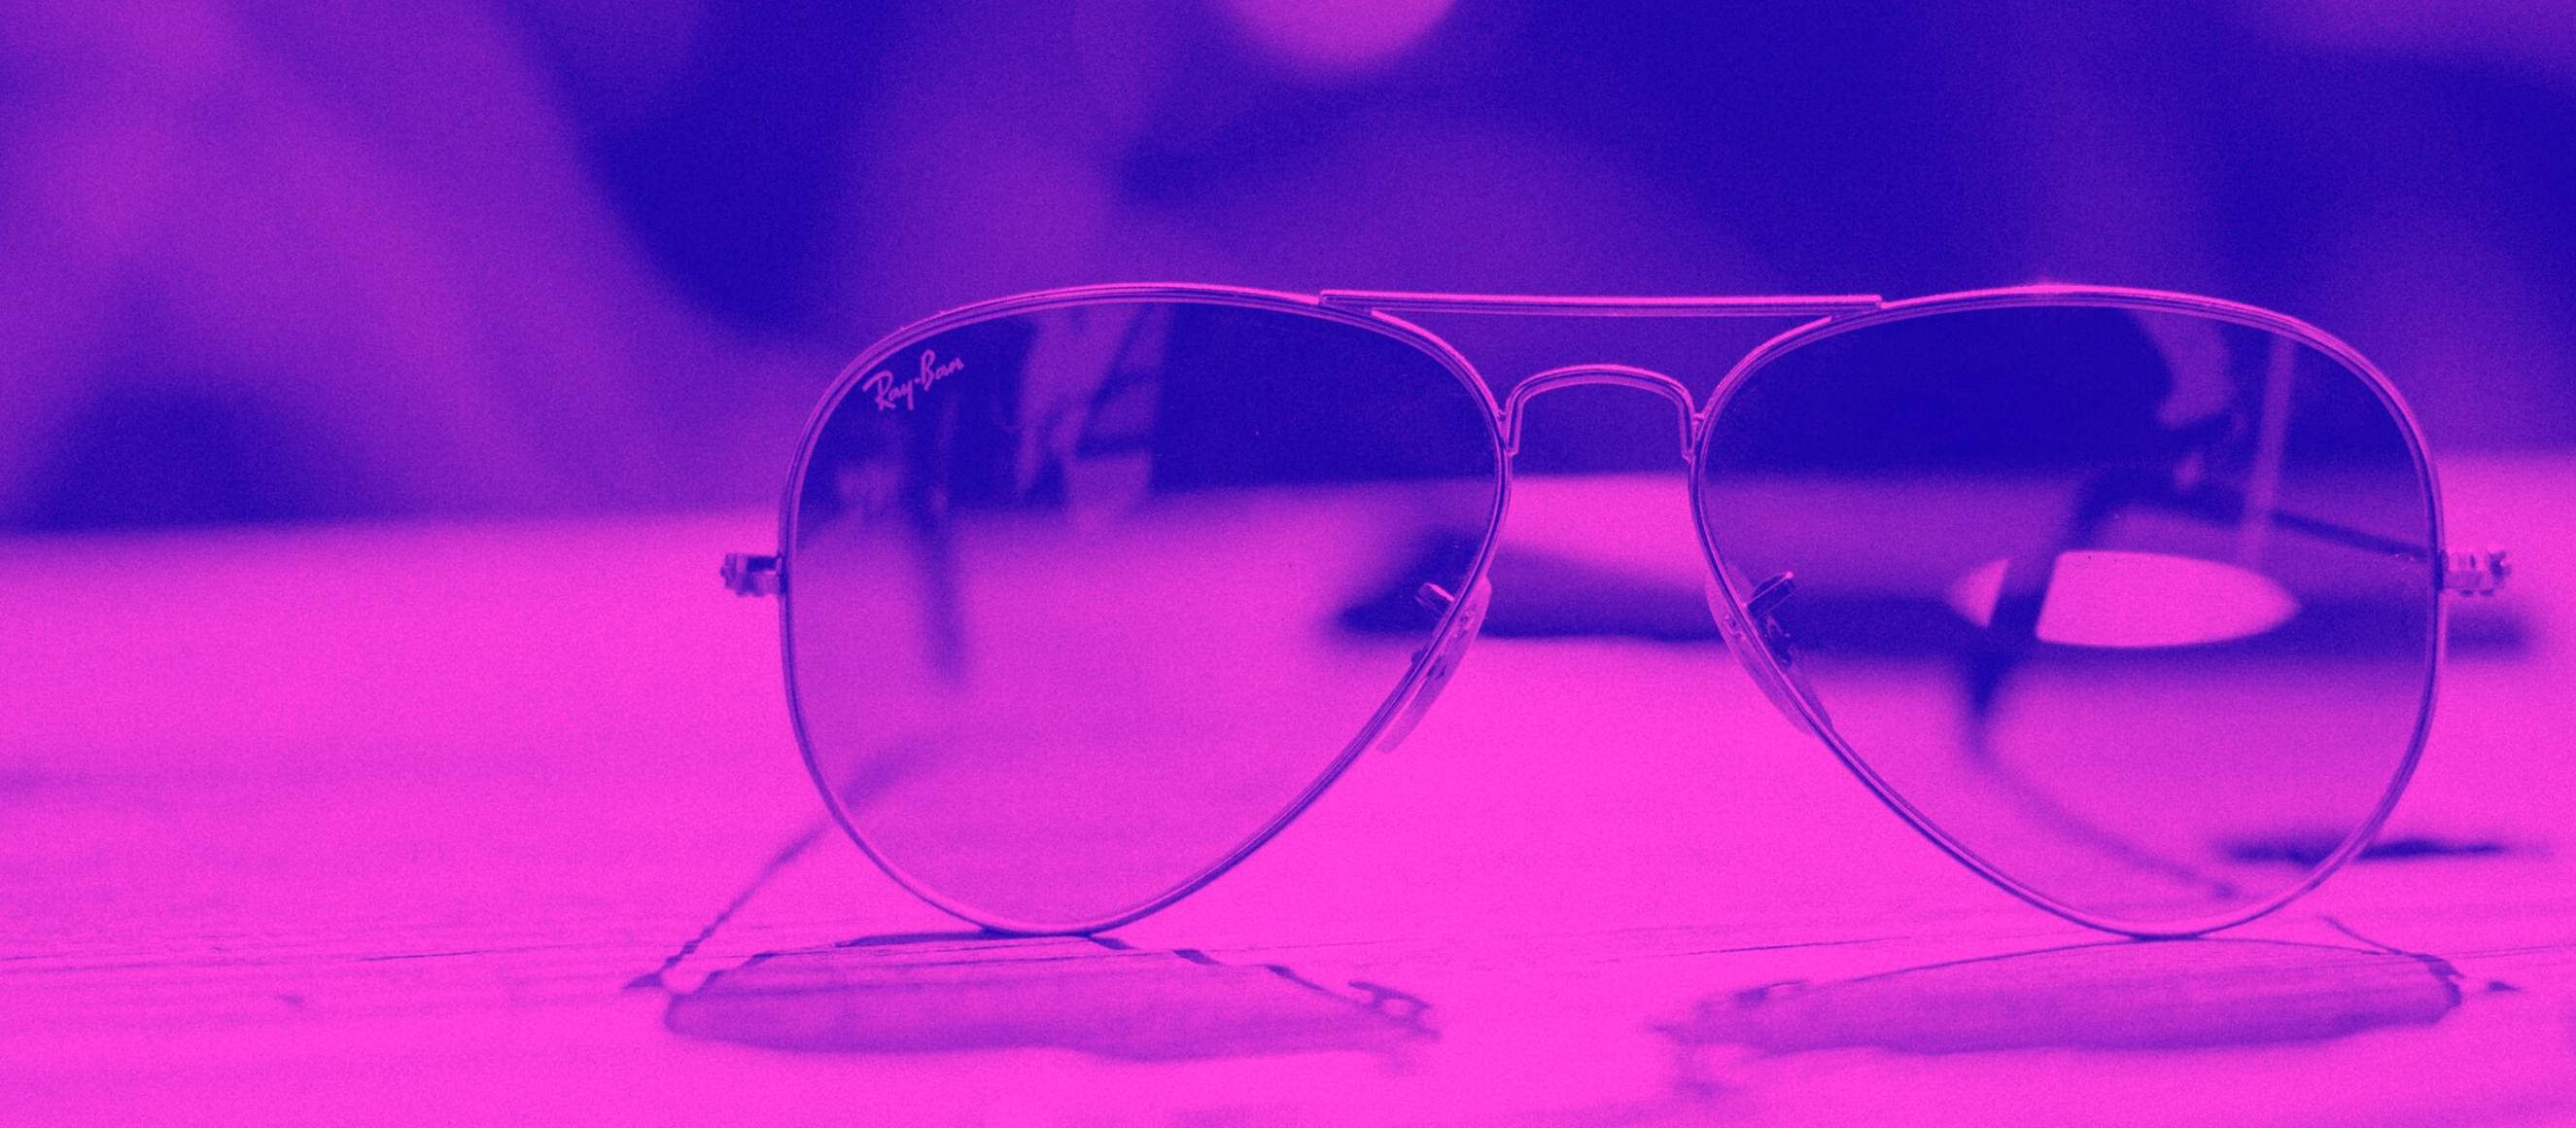 Photo of aviator sunglasses through a bright purple filter